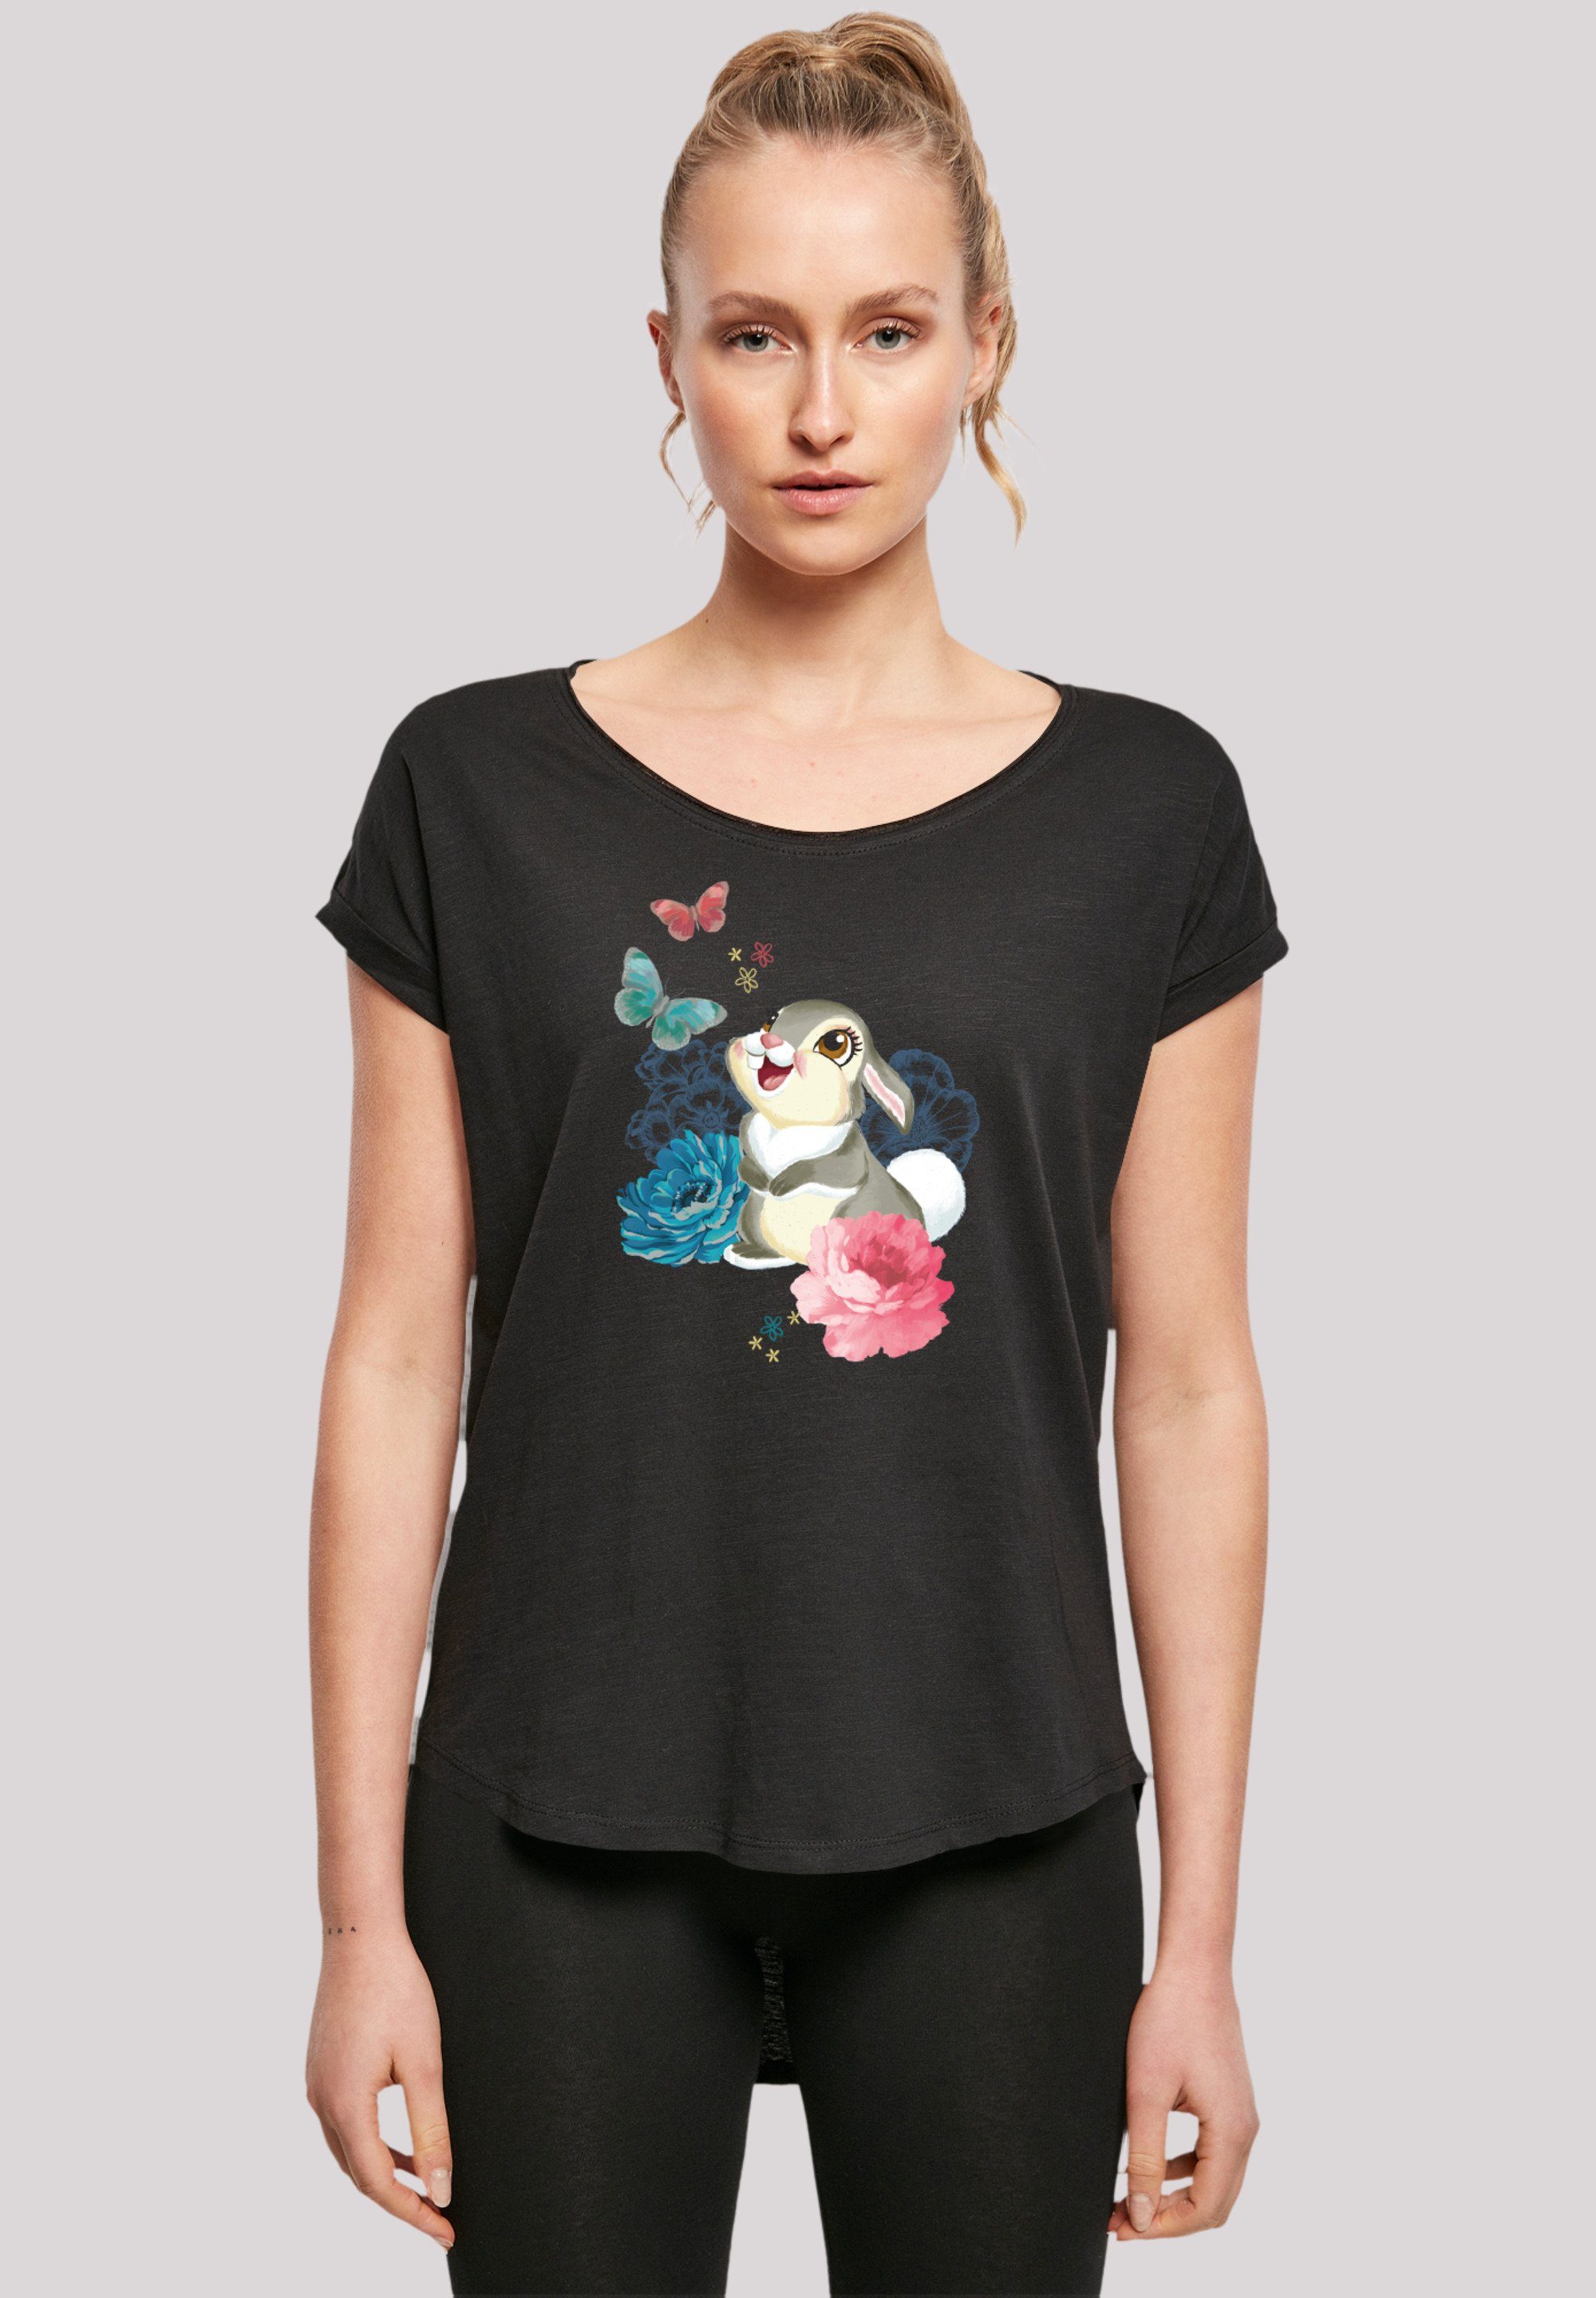 F4NT4STIC T-Shirt Disney Bambi Thumper Premium Qualität | T-Shirts